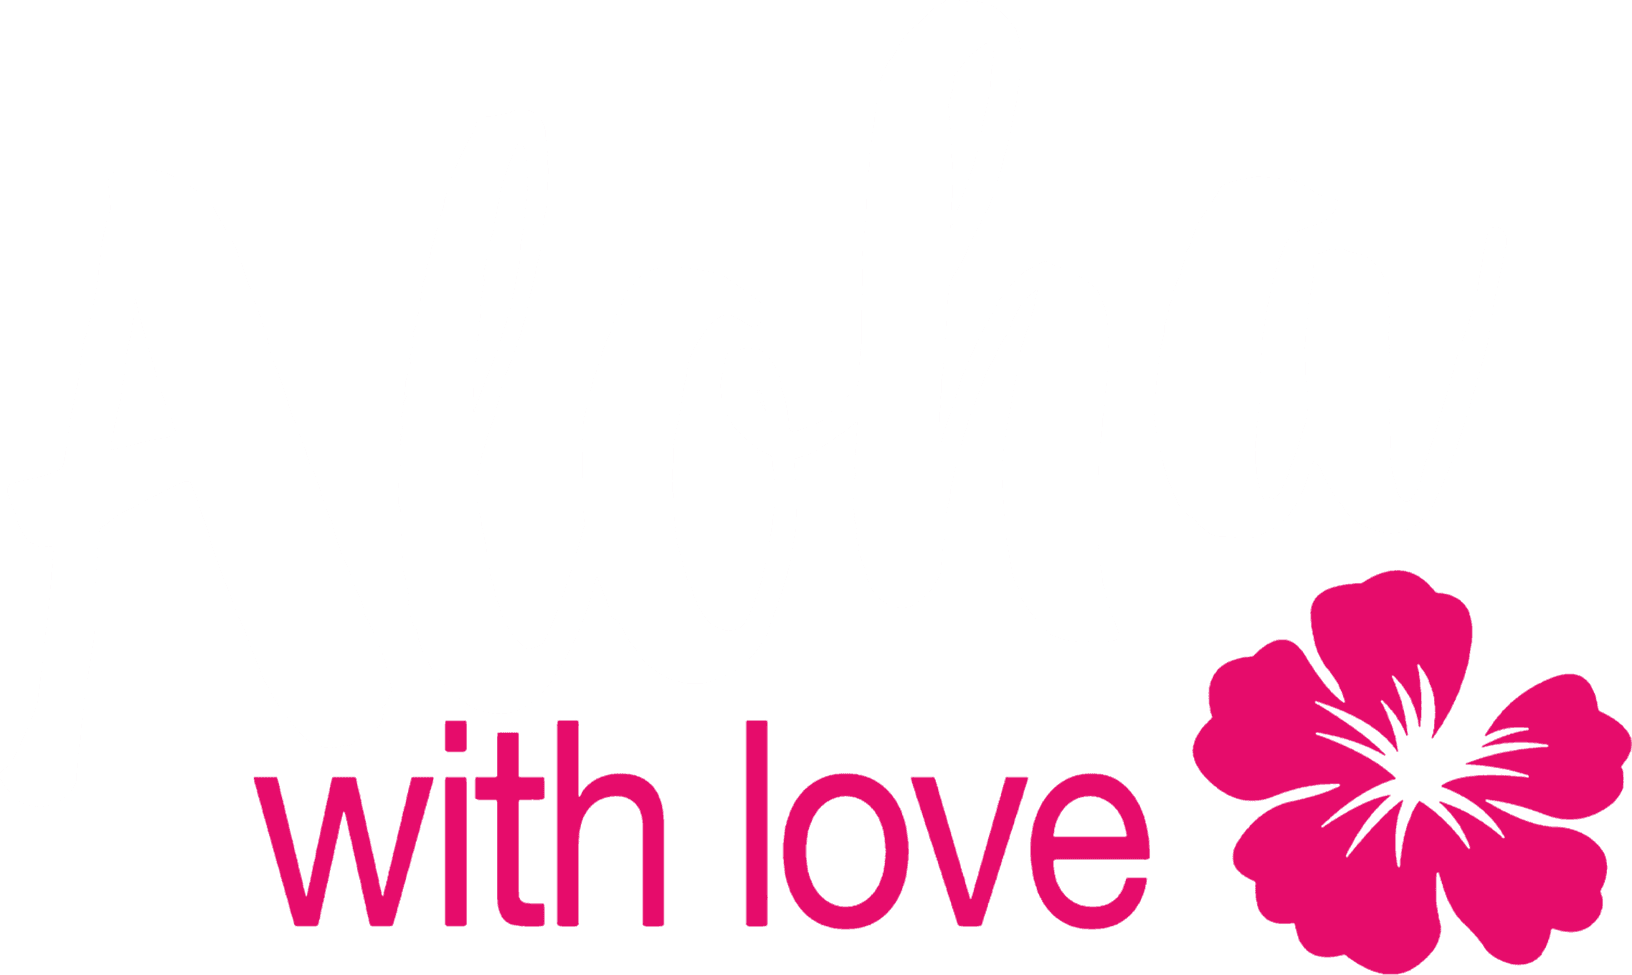 Aloha with Love logo